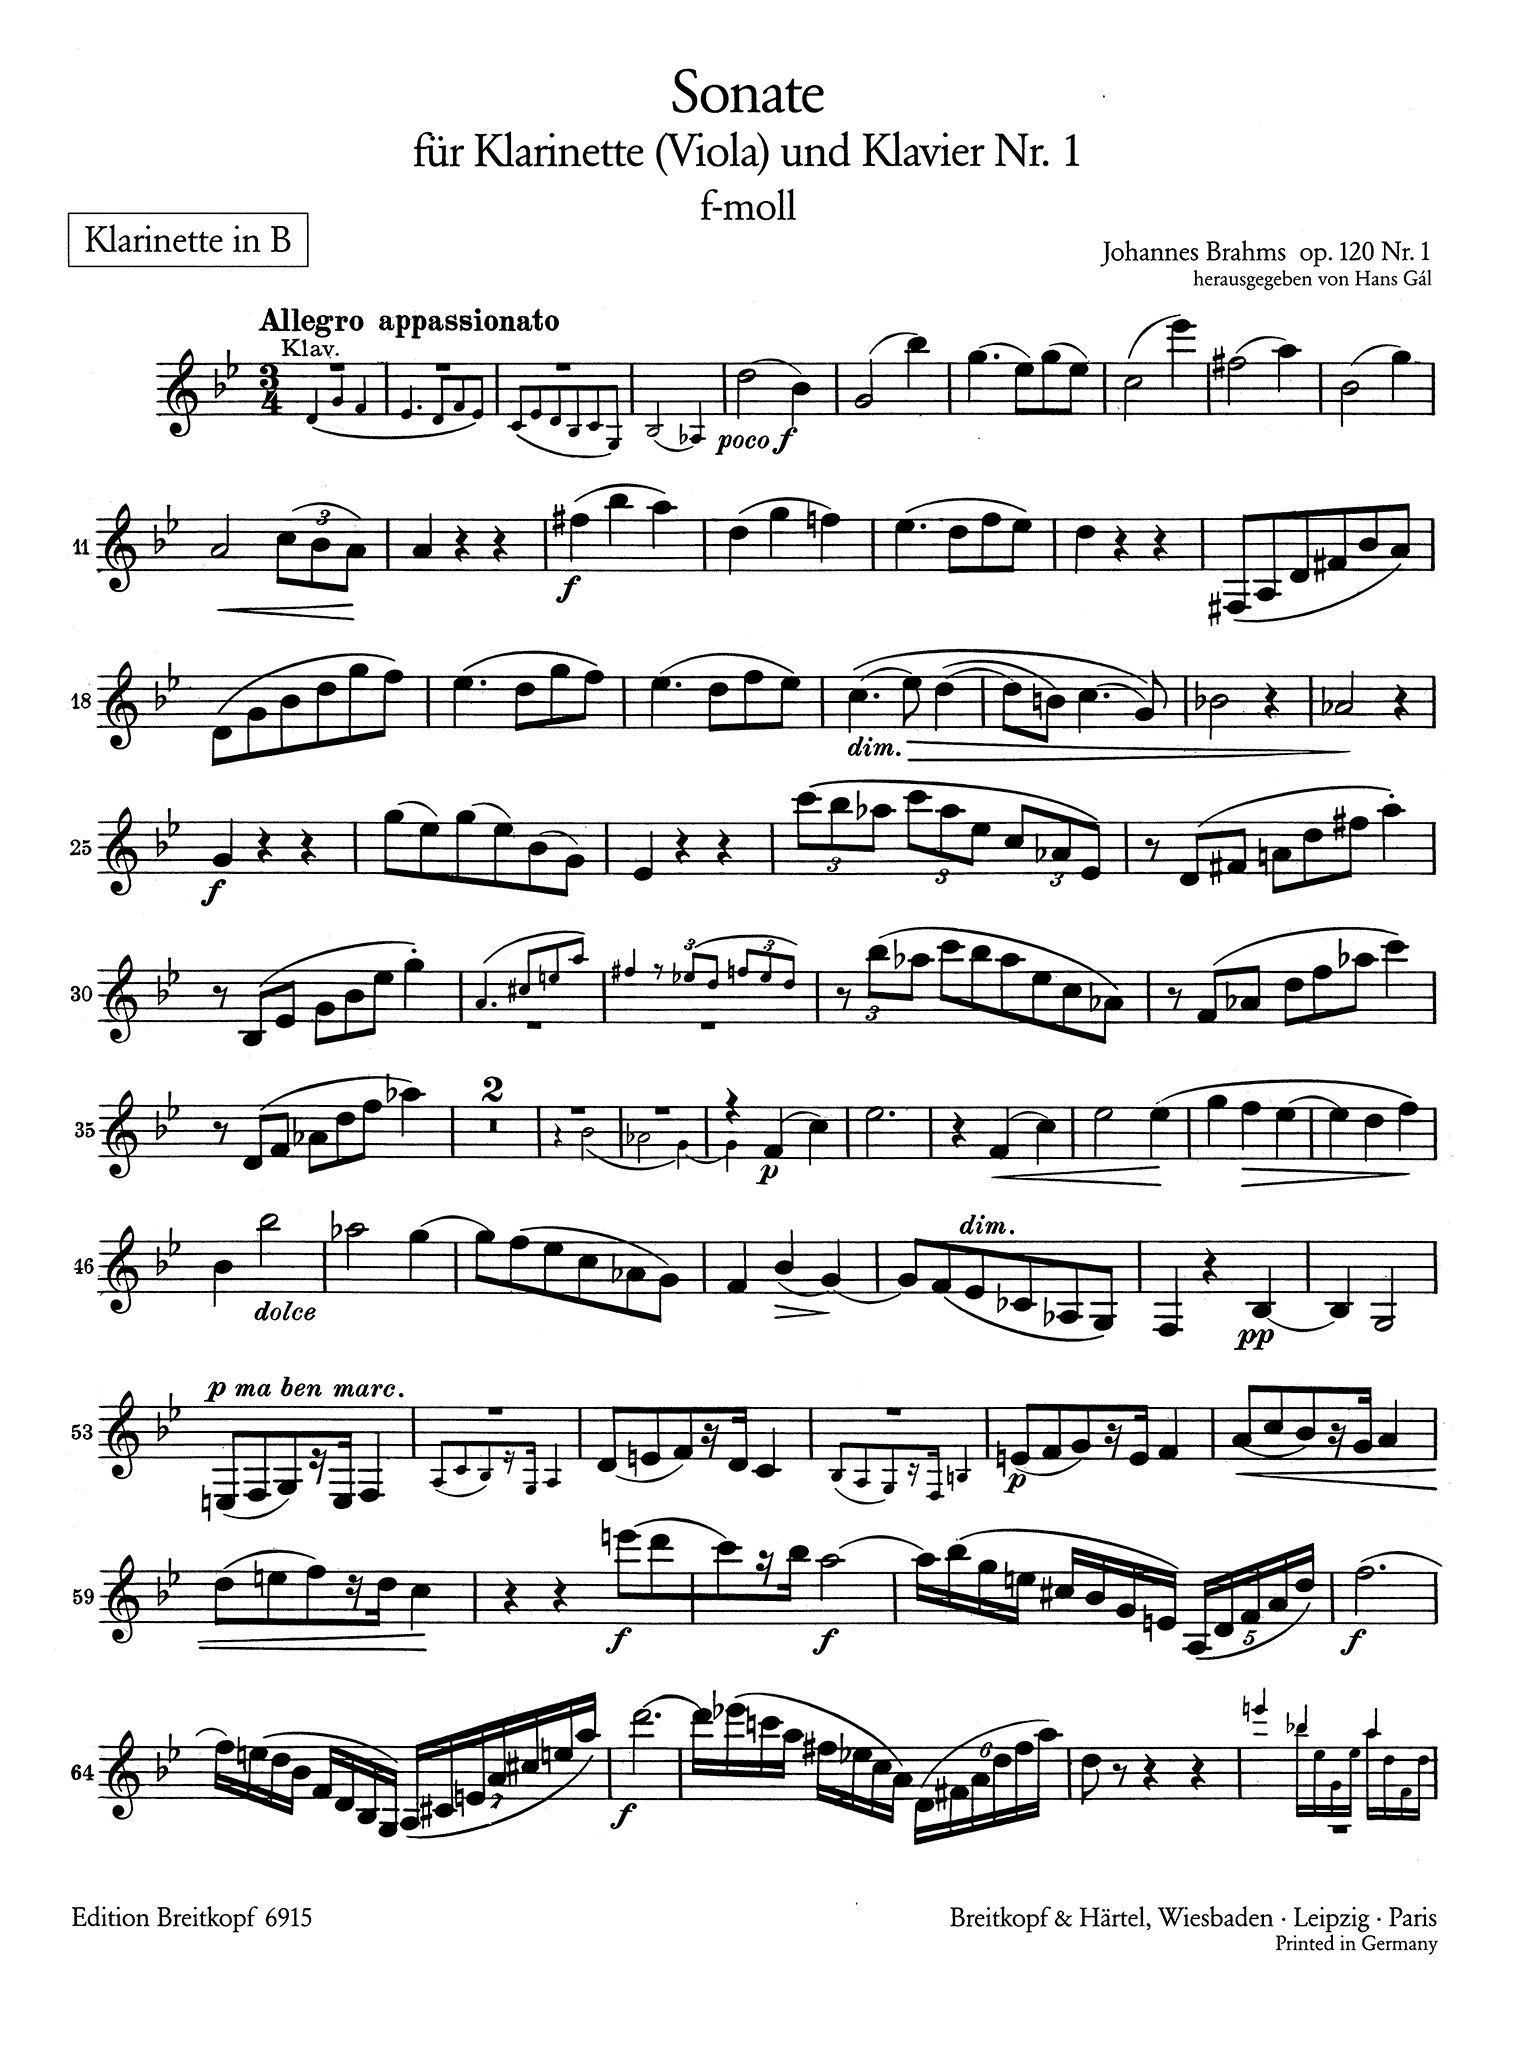 Sonata in F Minor, Op. 120 No. 1 Clarinet part